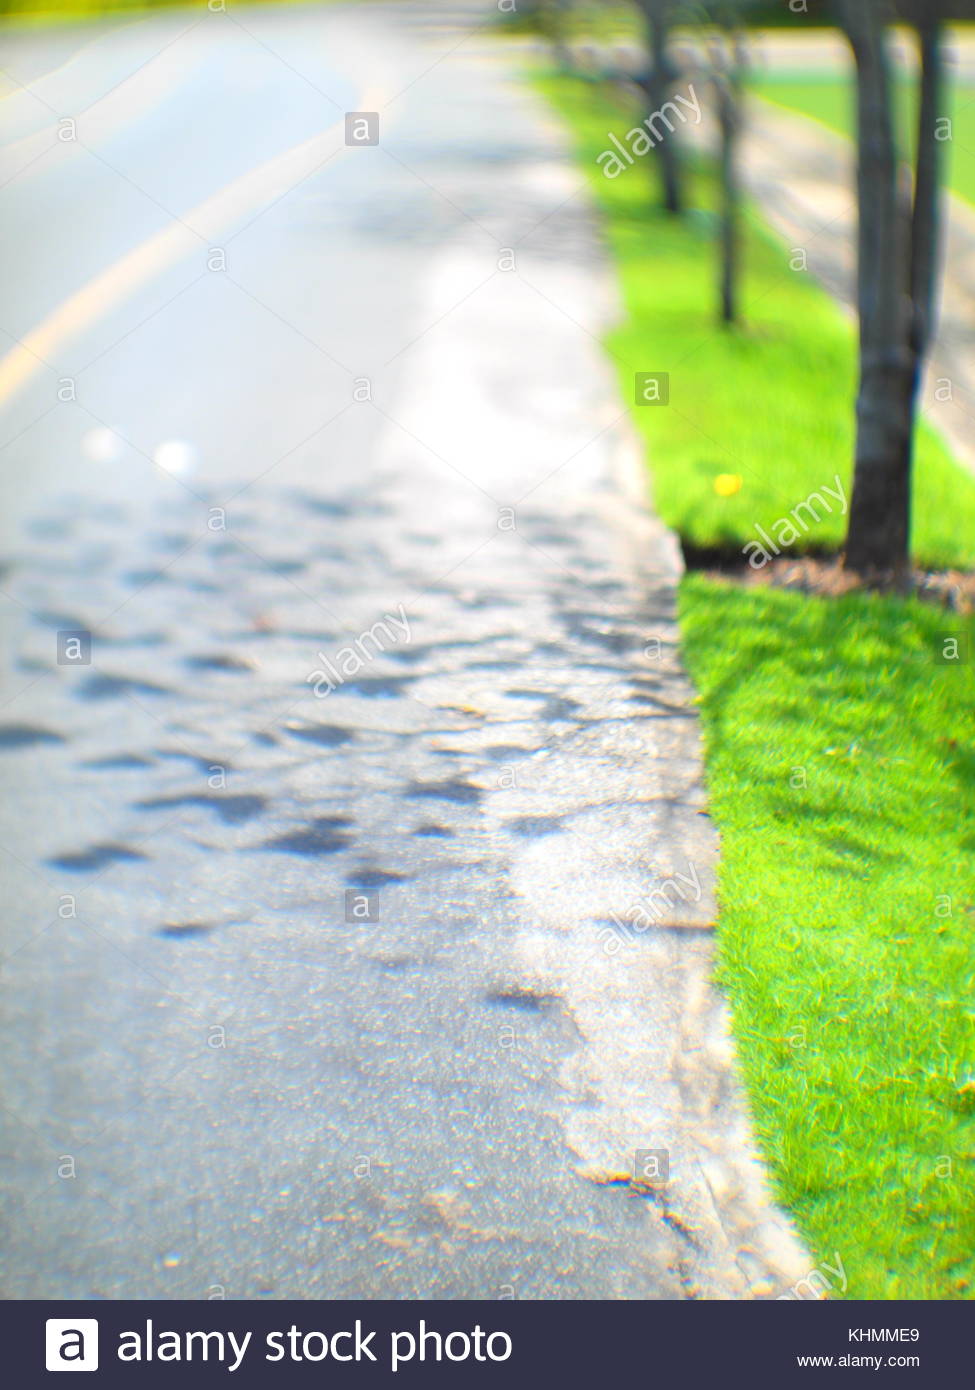 Blurred Background Blur Road Stock Photo